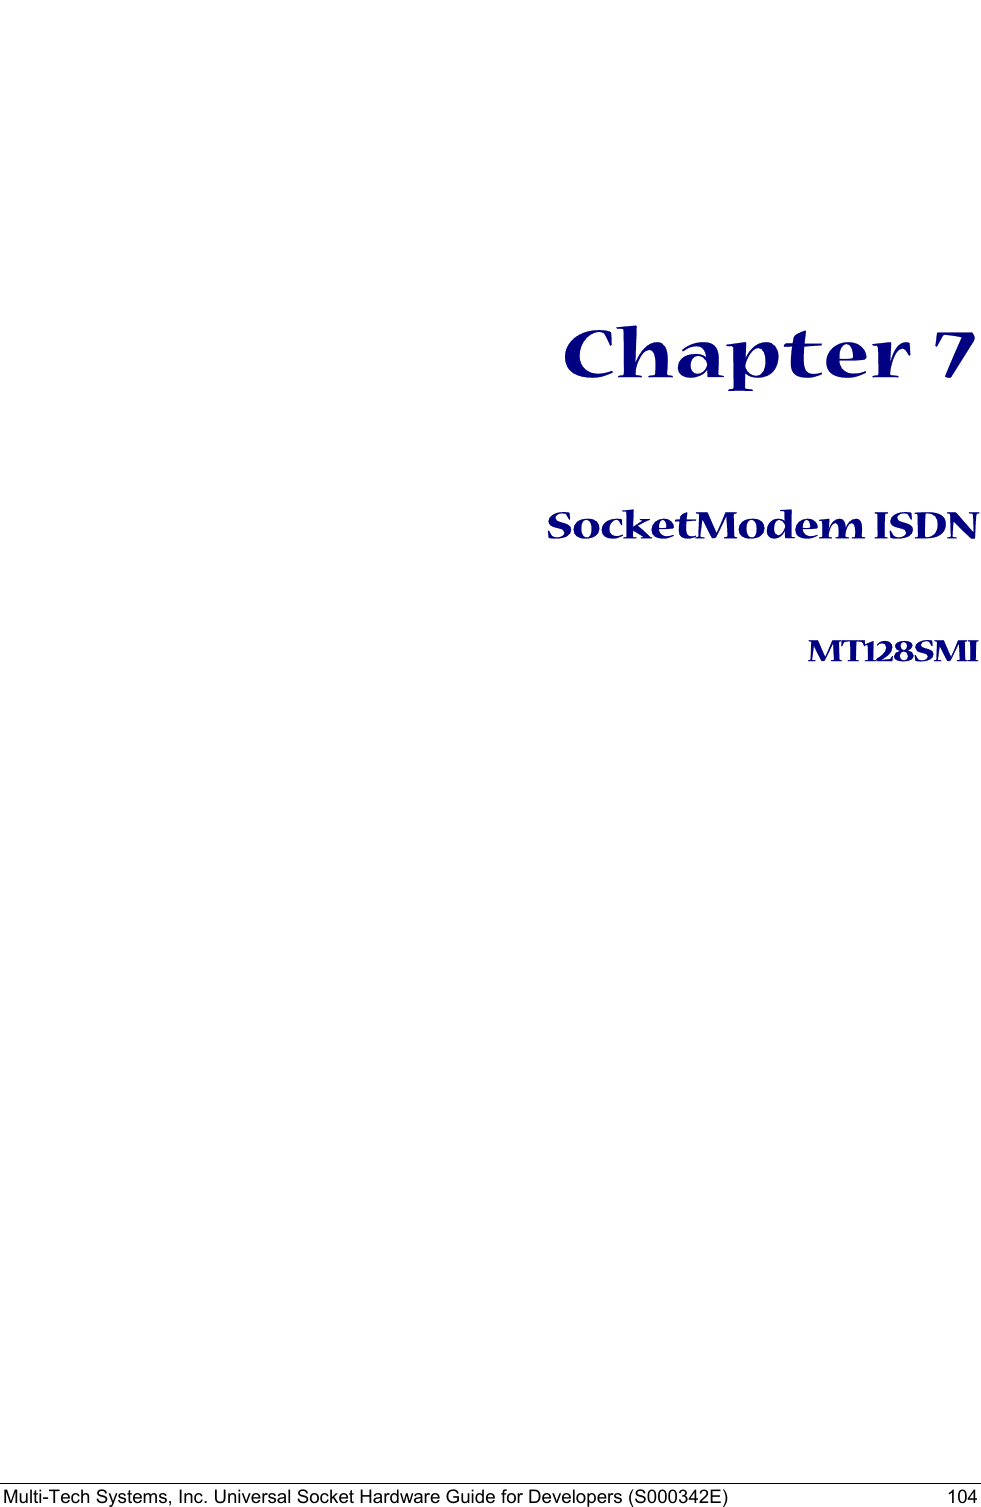  Multi-Tech Systems, Inc. Universal Socket Hardware Guide for Developers (S000342E)  104            Chapter 7   SocketModem ISDN   MT128SMI                 